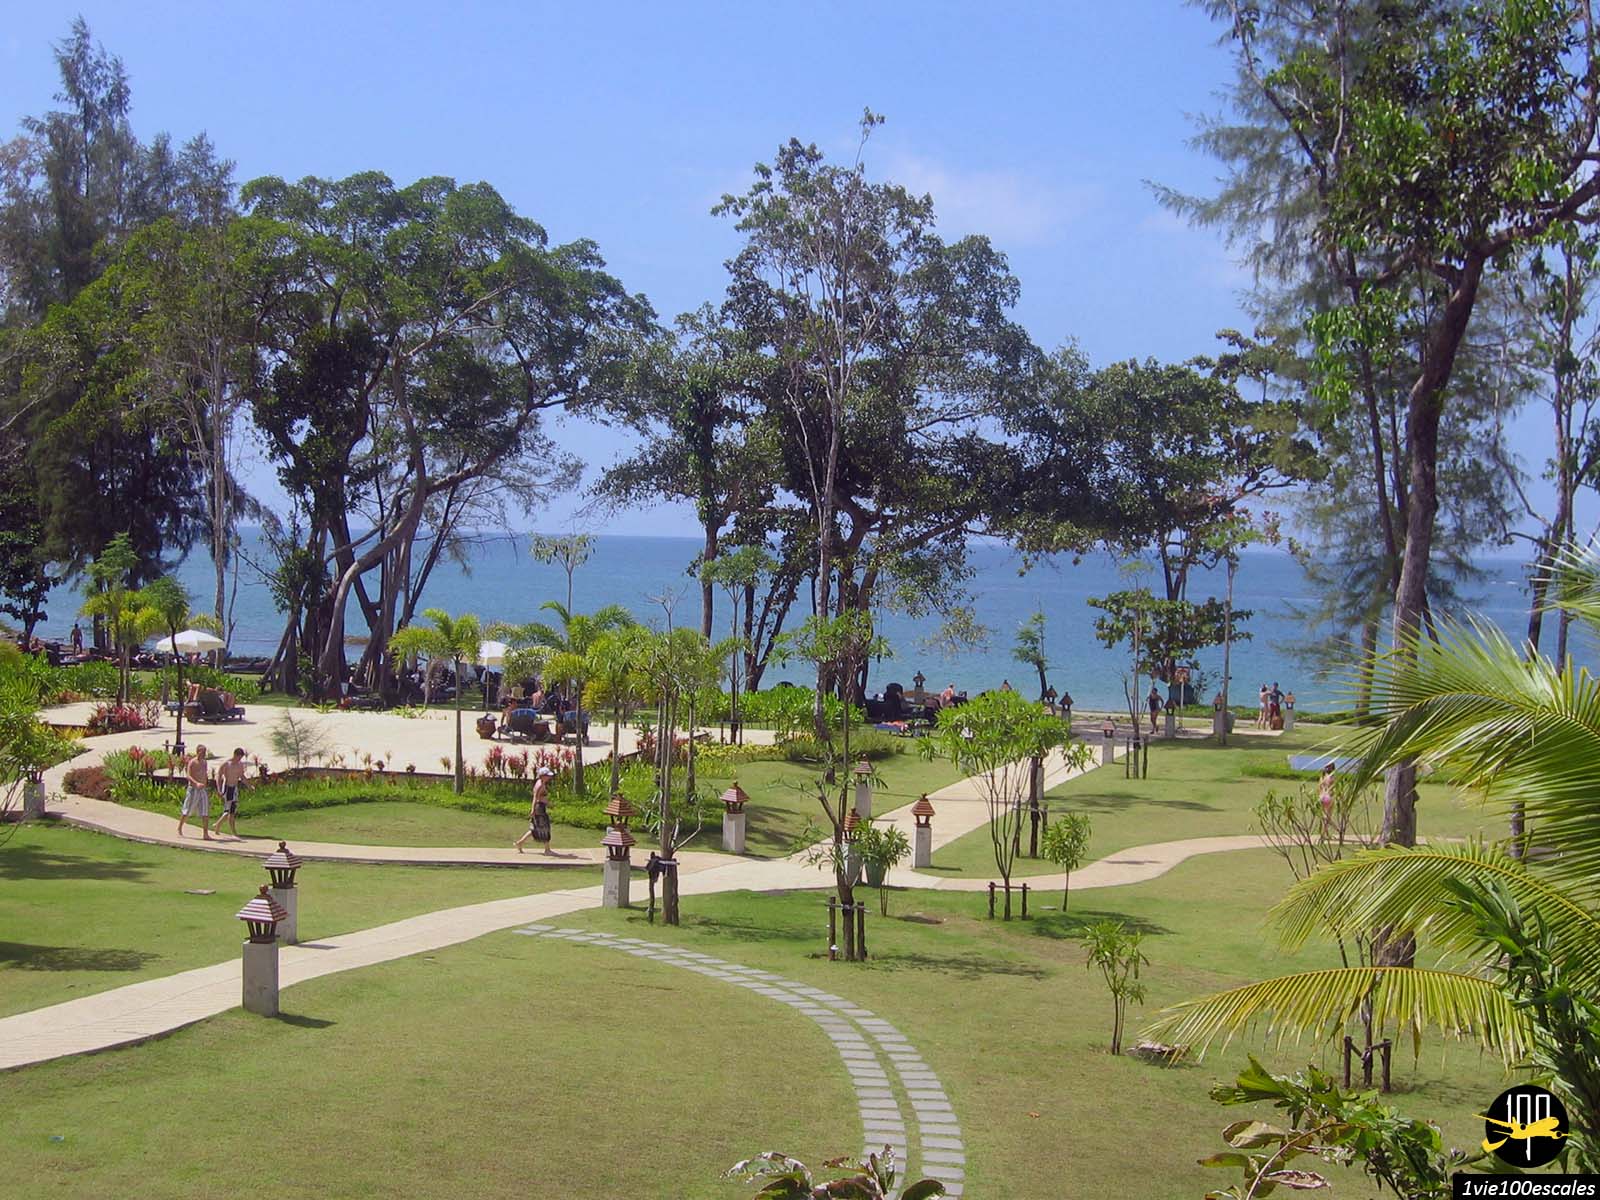 Le jardin arboré du Khaolak Merlin Resort au bord de la mer